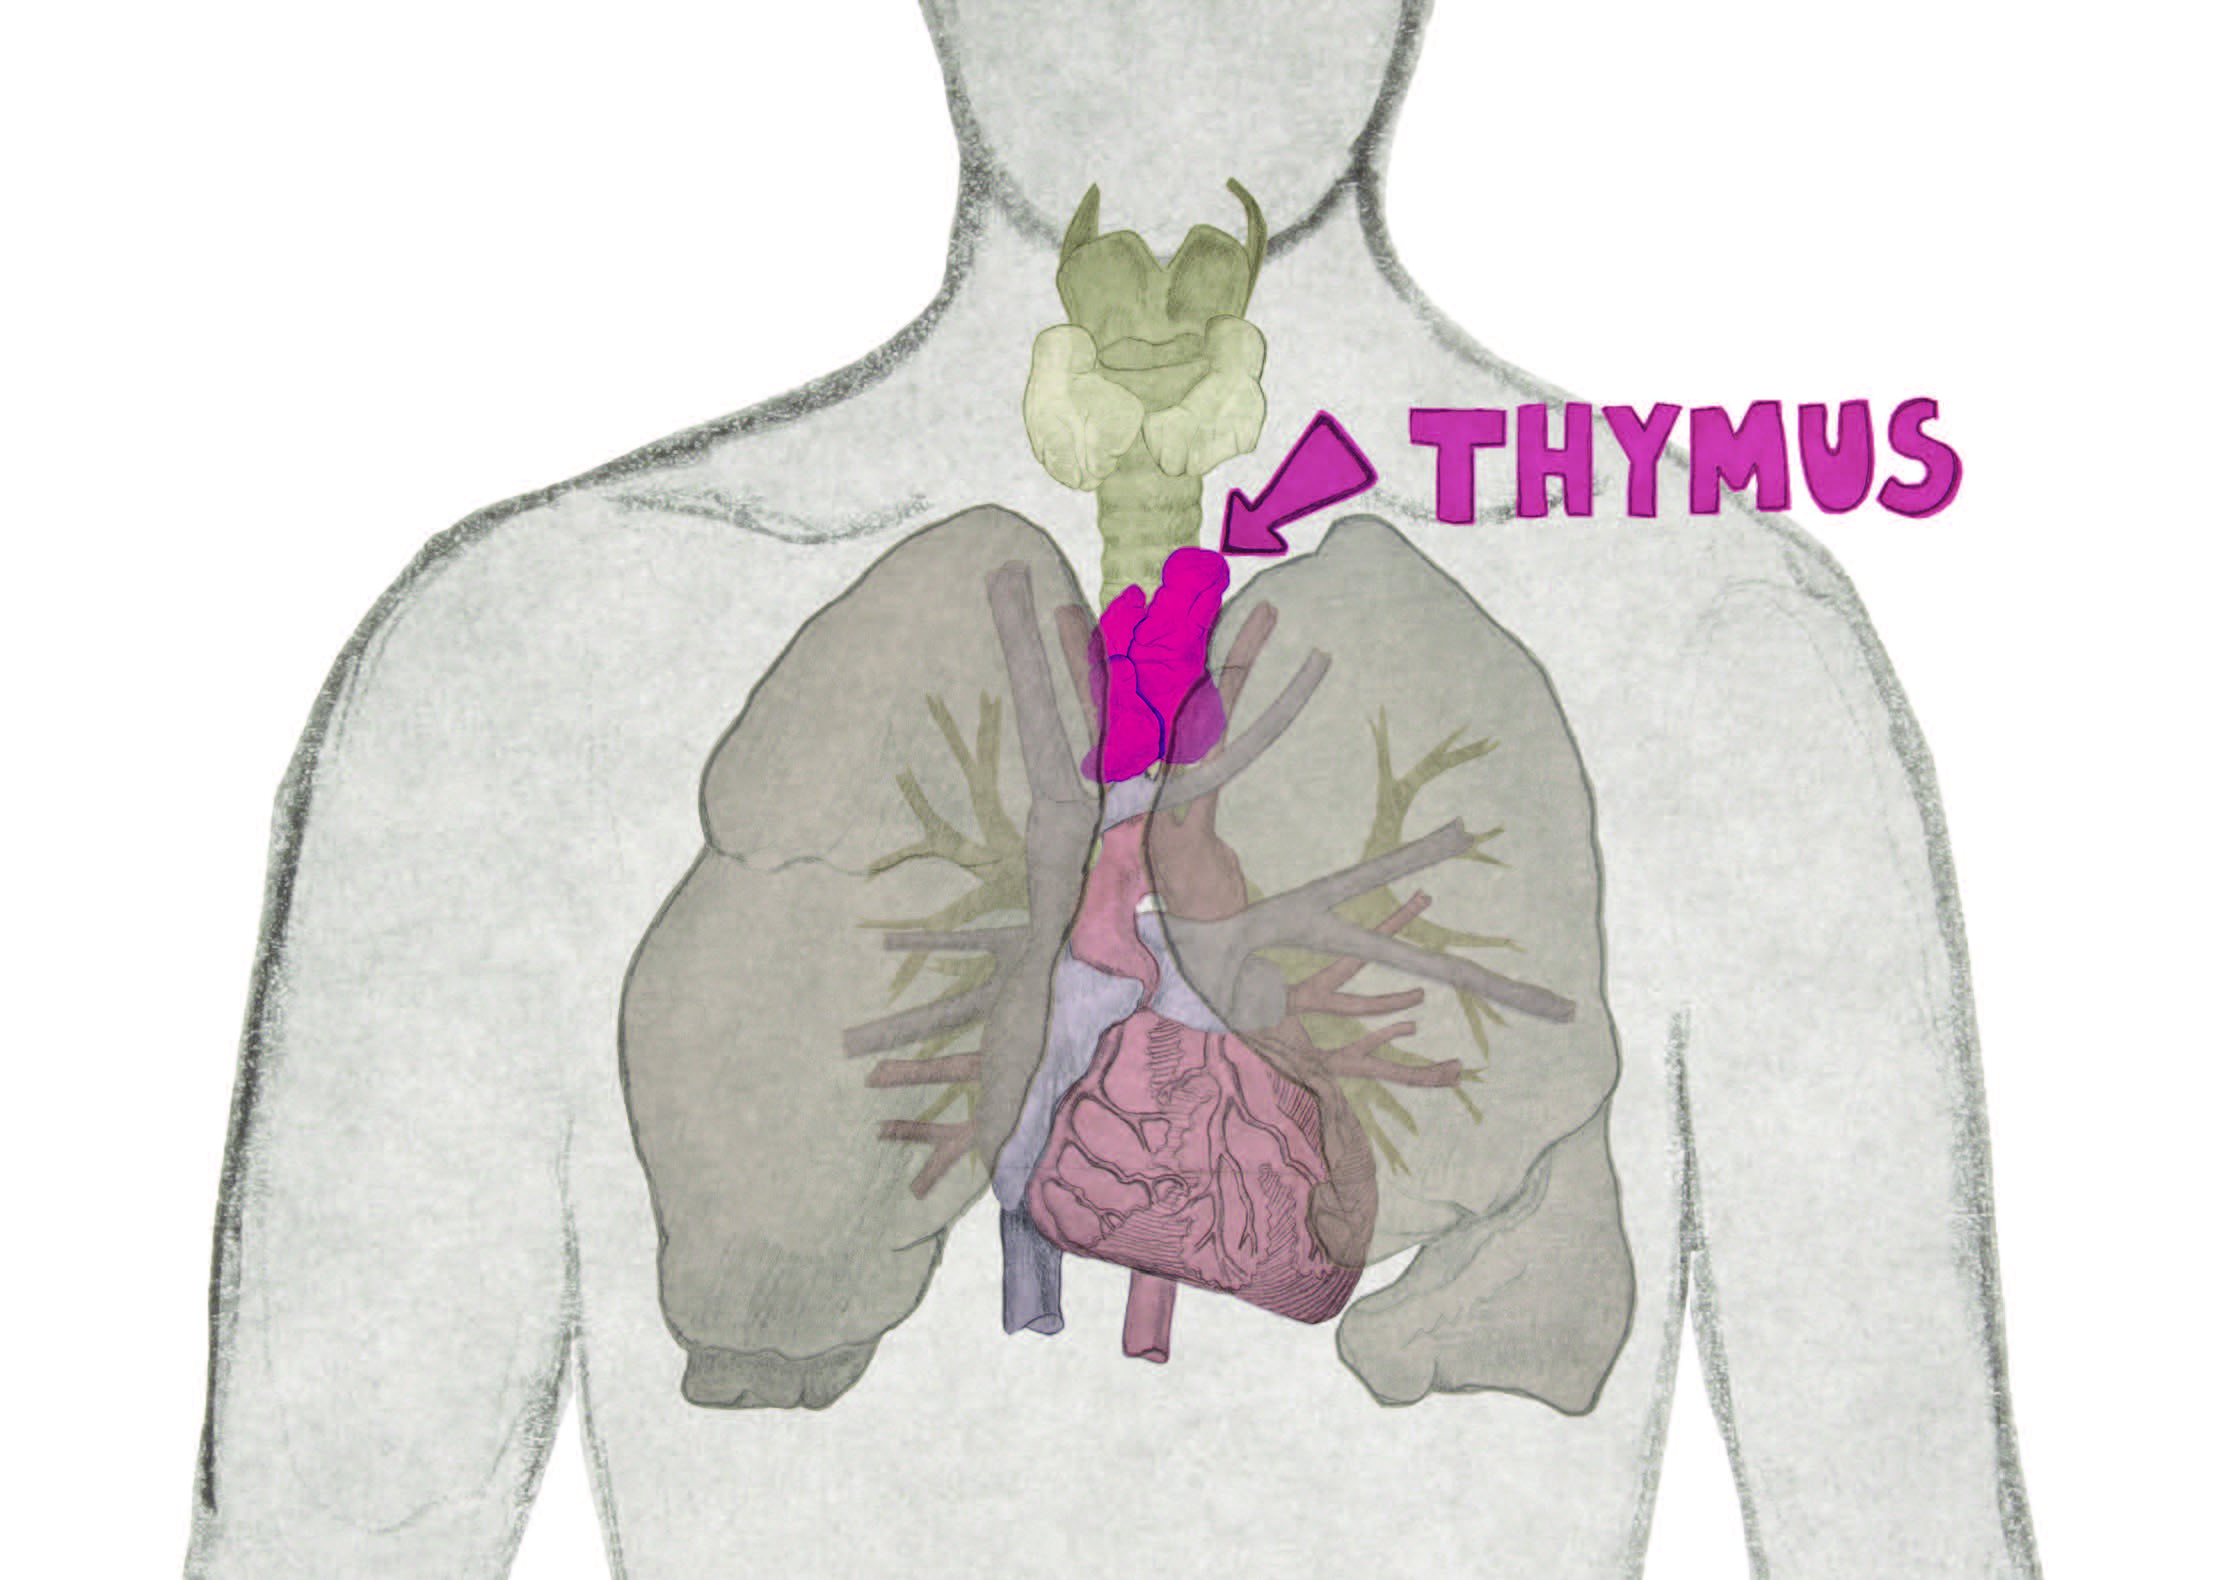 thymus gland anatomy